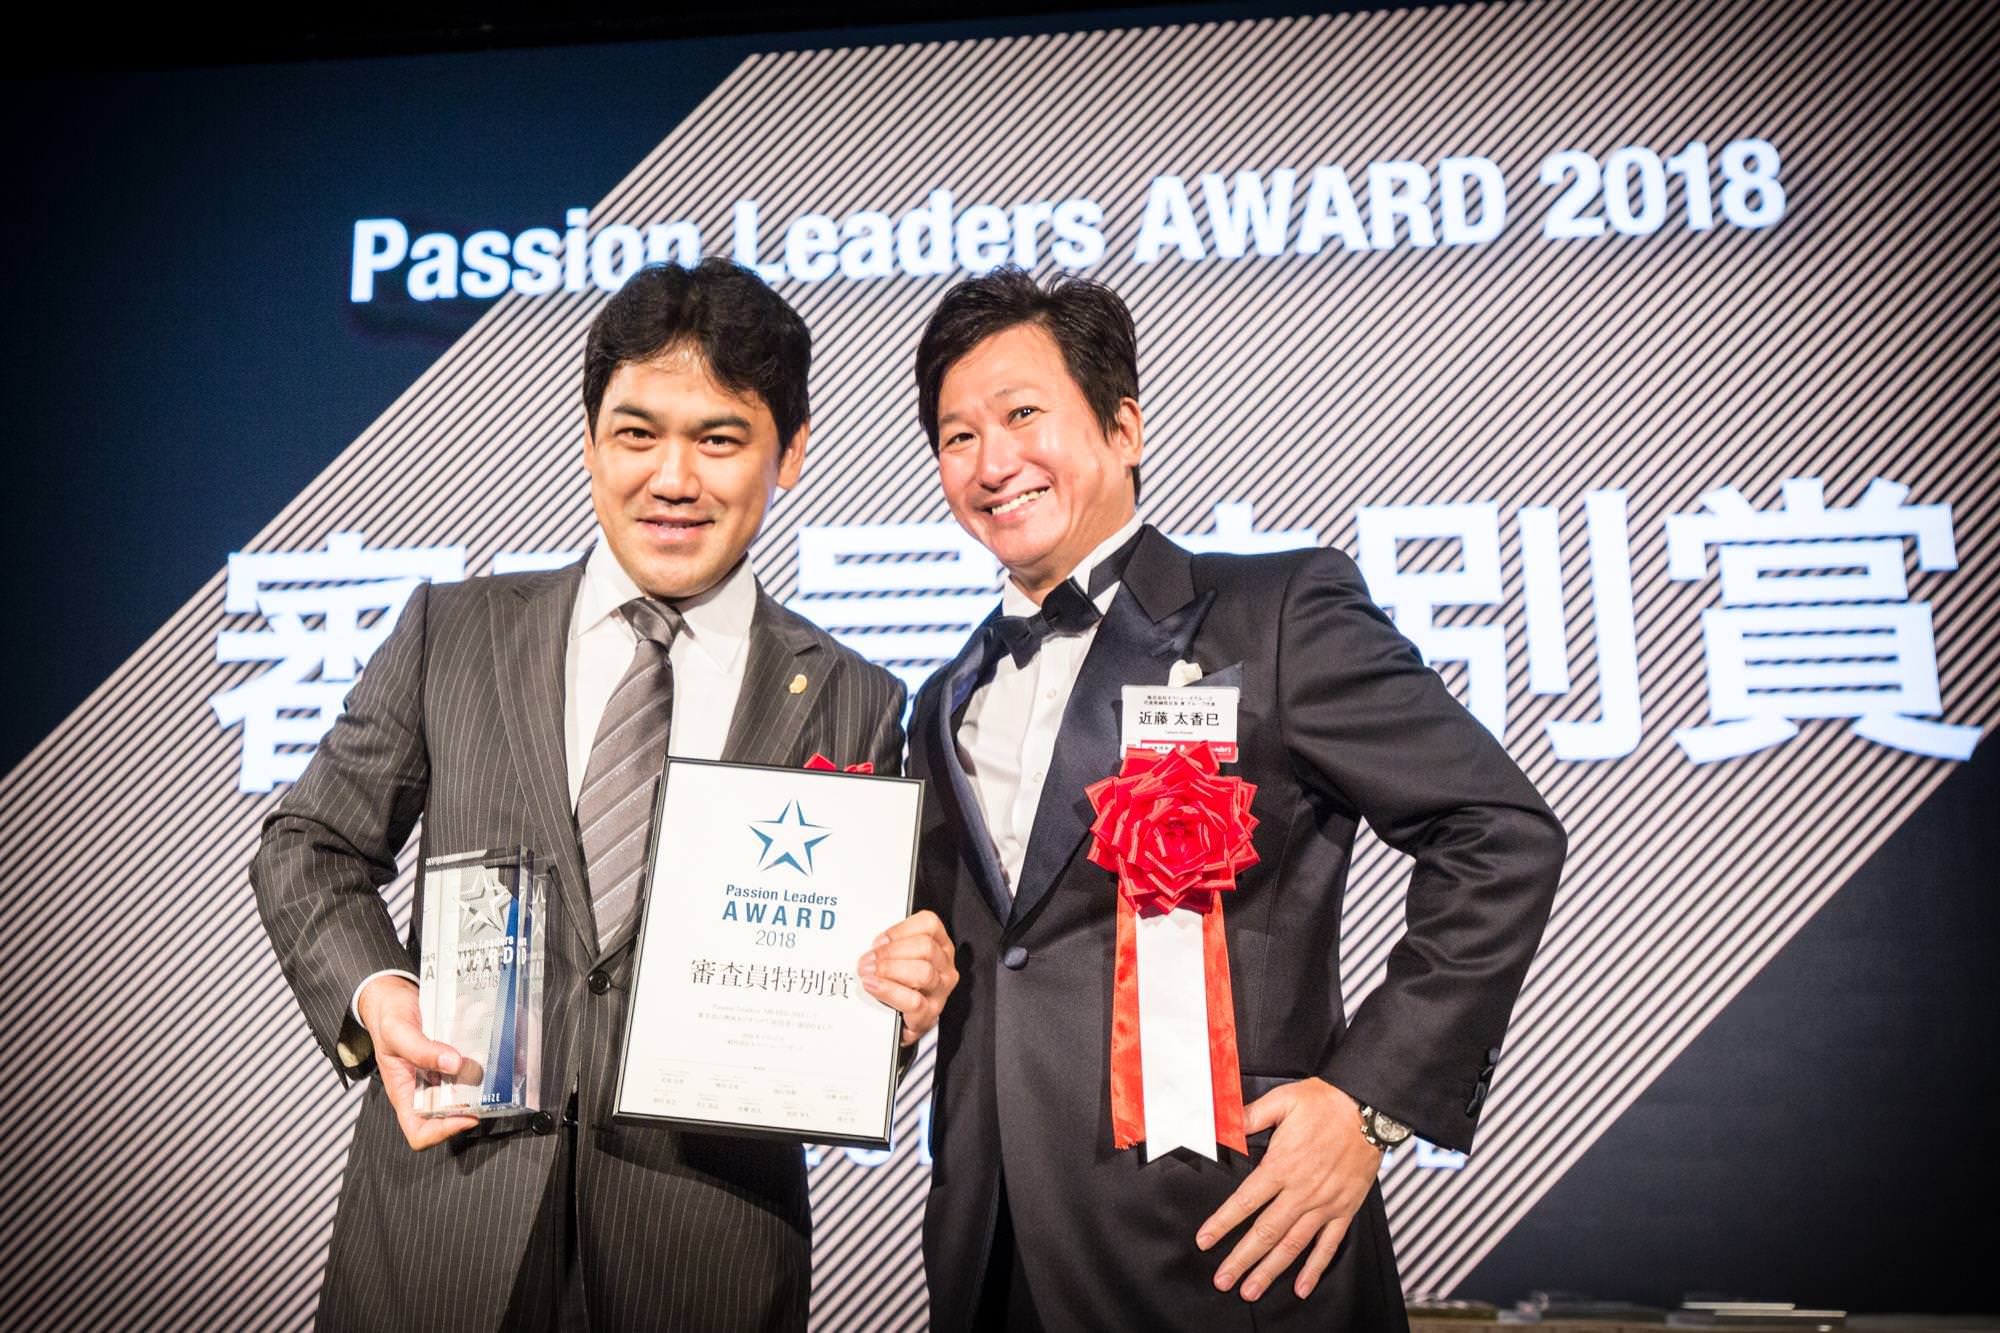 PassionLeaders AWARD審査員特別賞受賞の報告